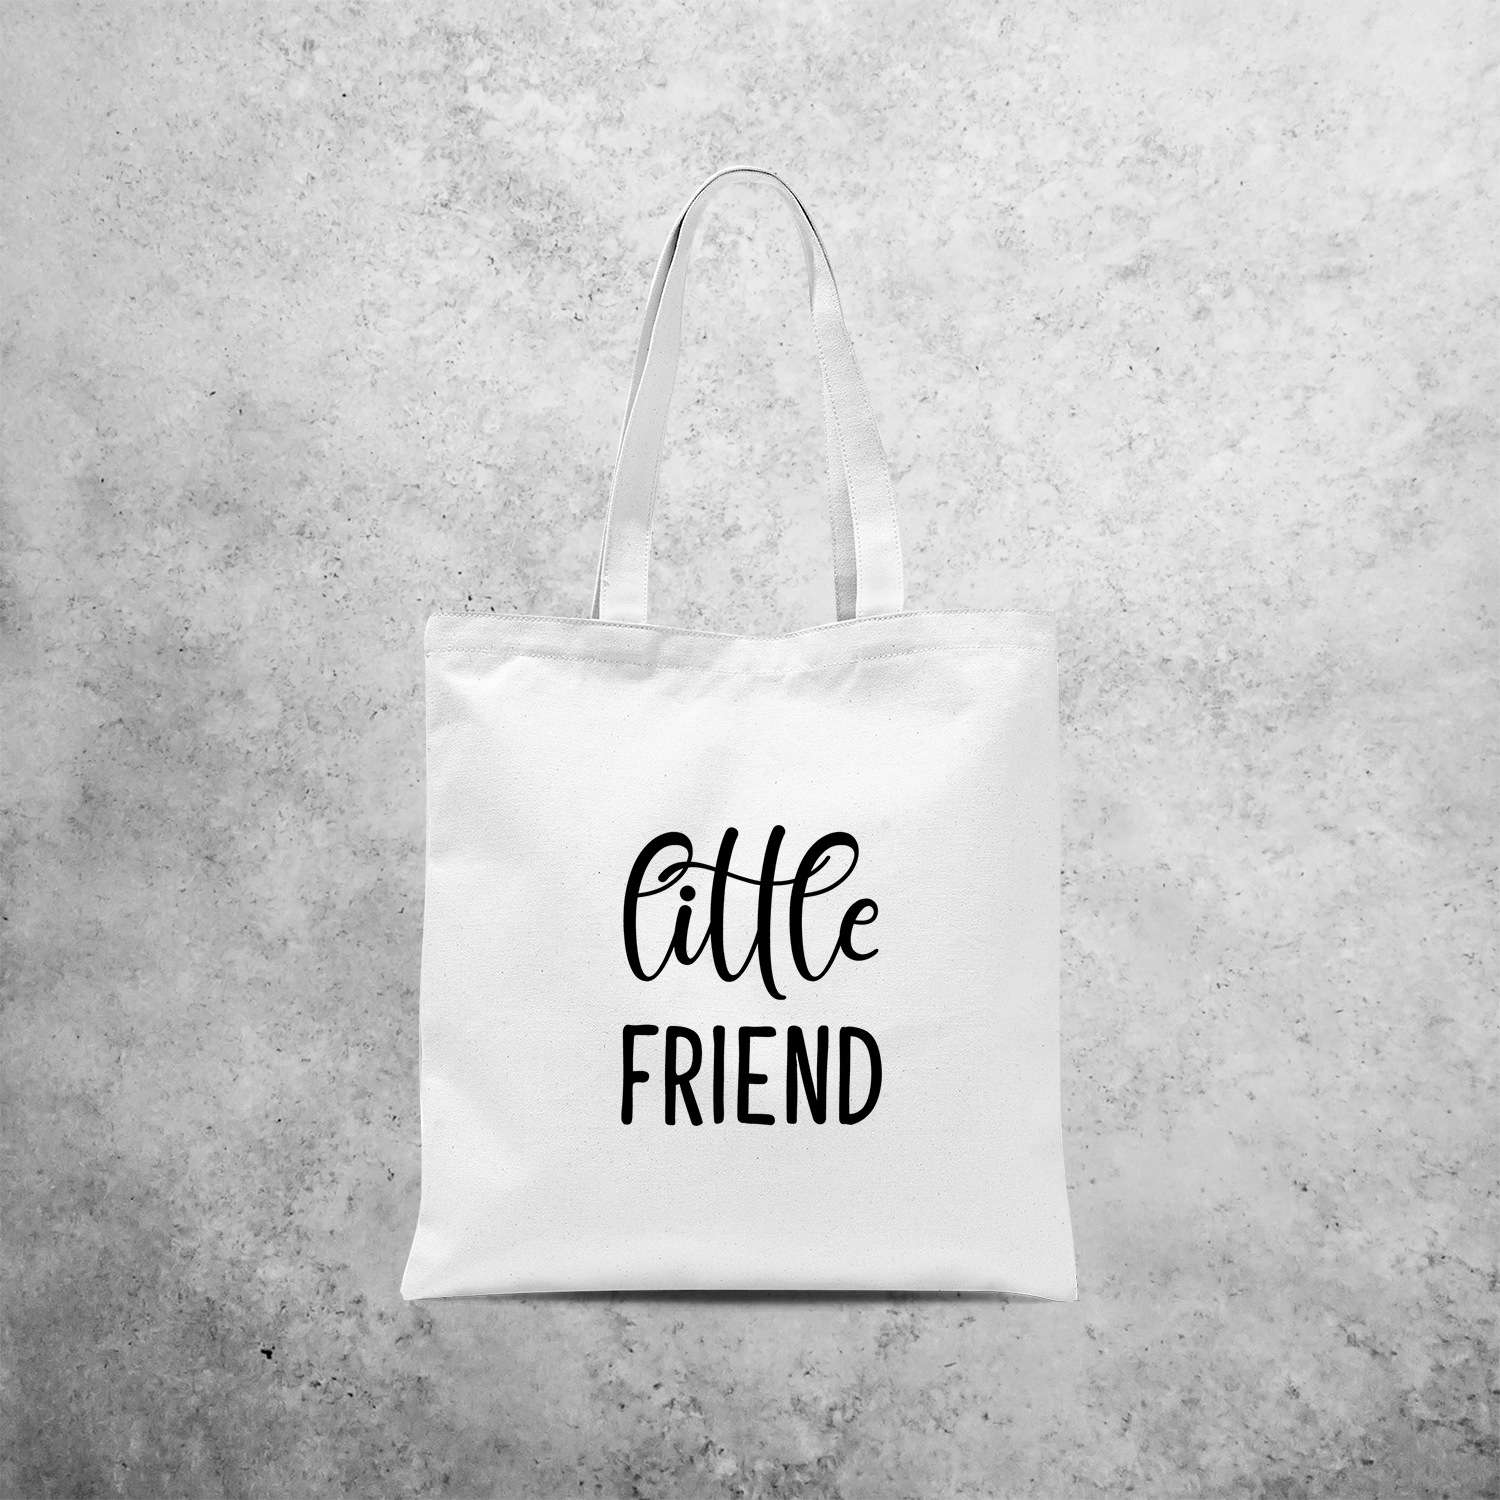 'Little friend' tote bag